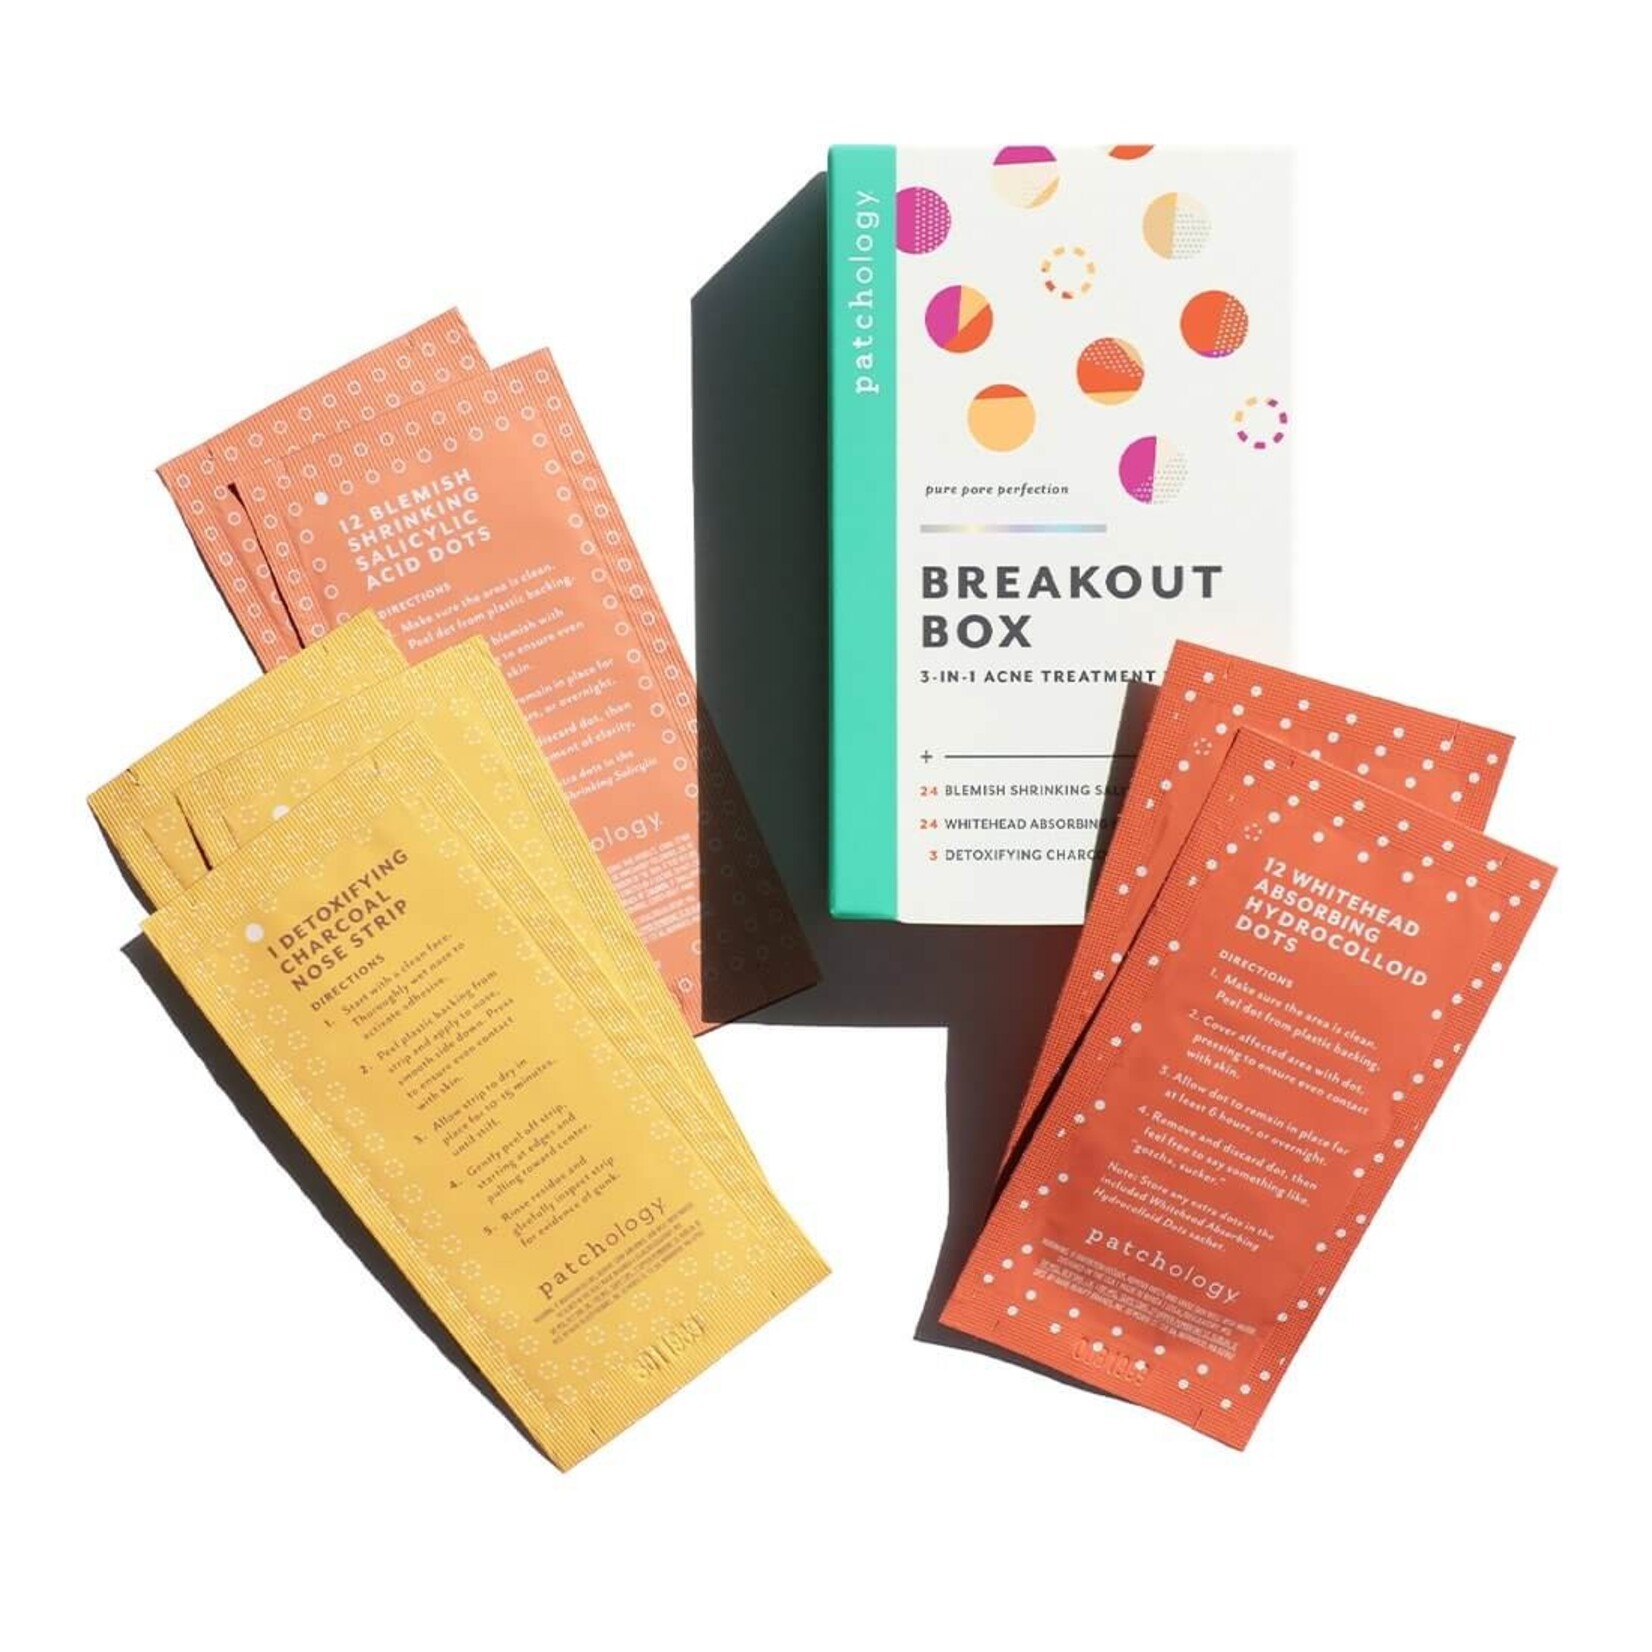 Breakout Box 3- IN-1 Acne Treatment Kit